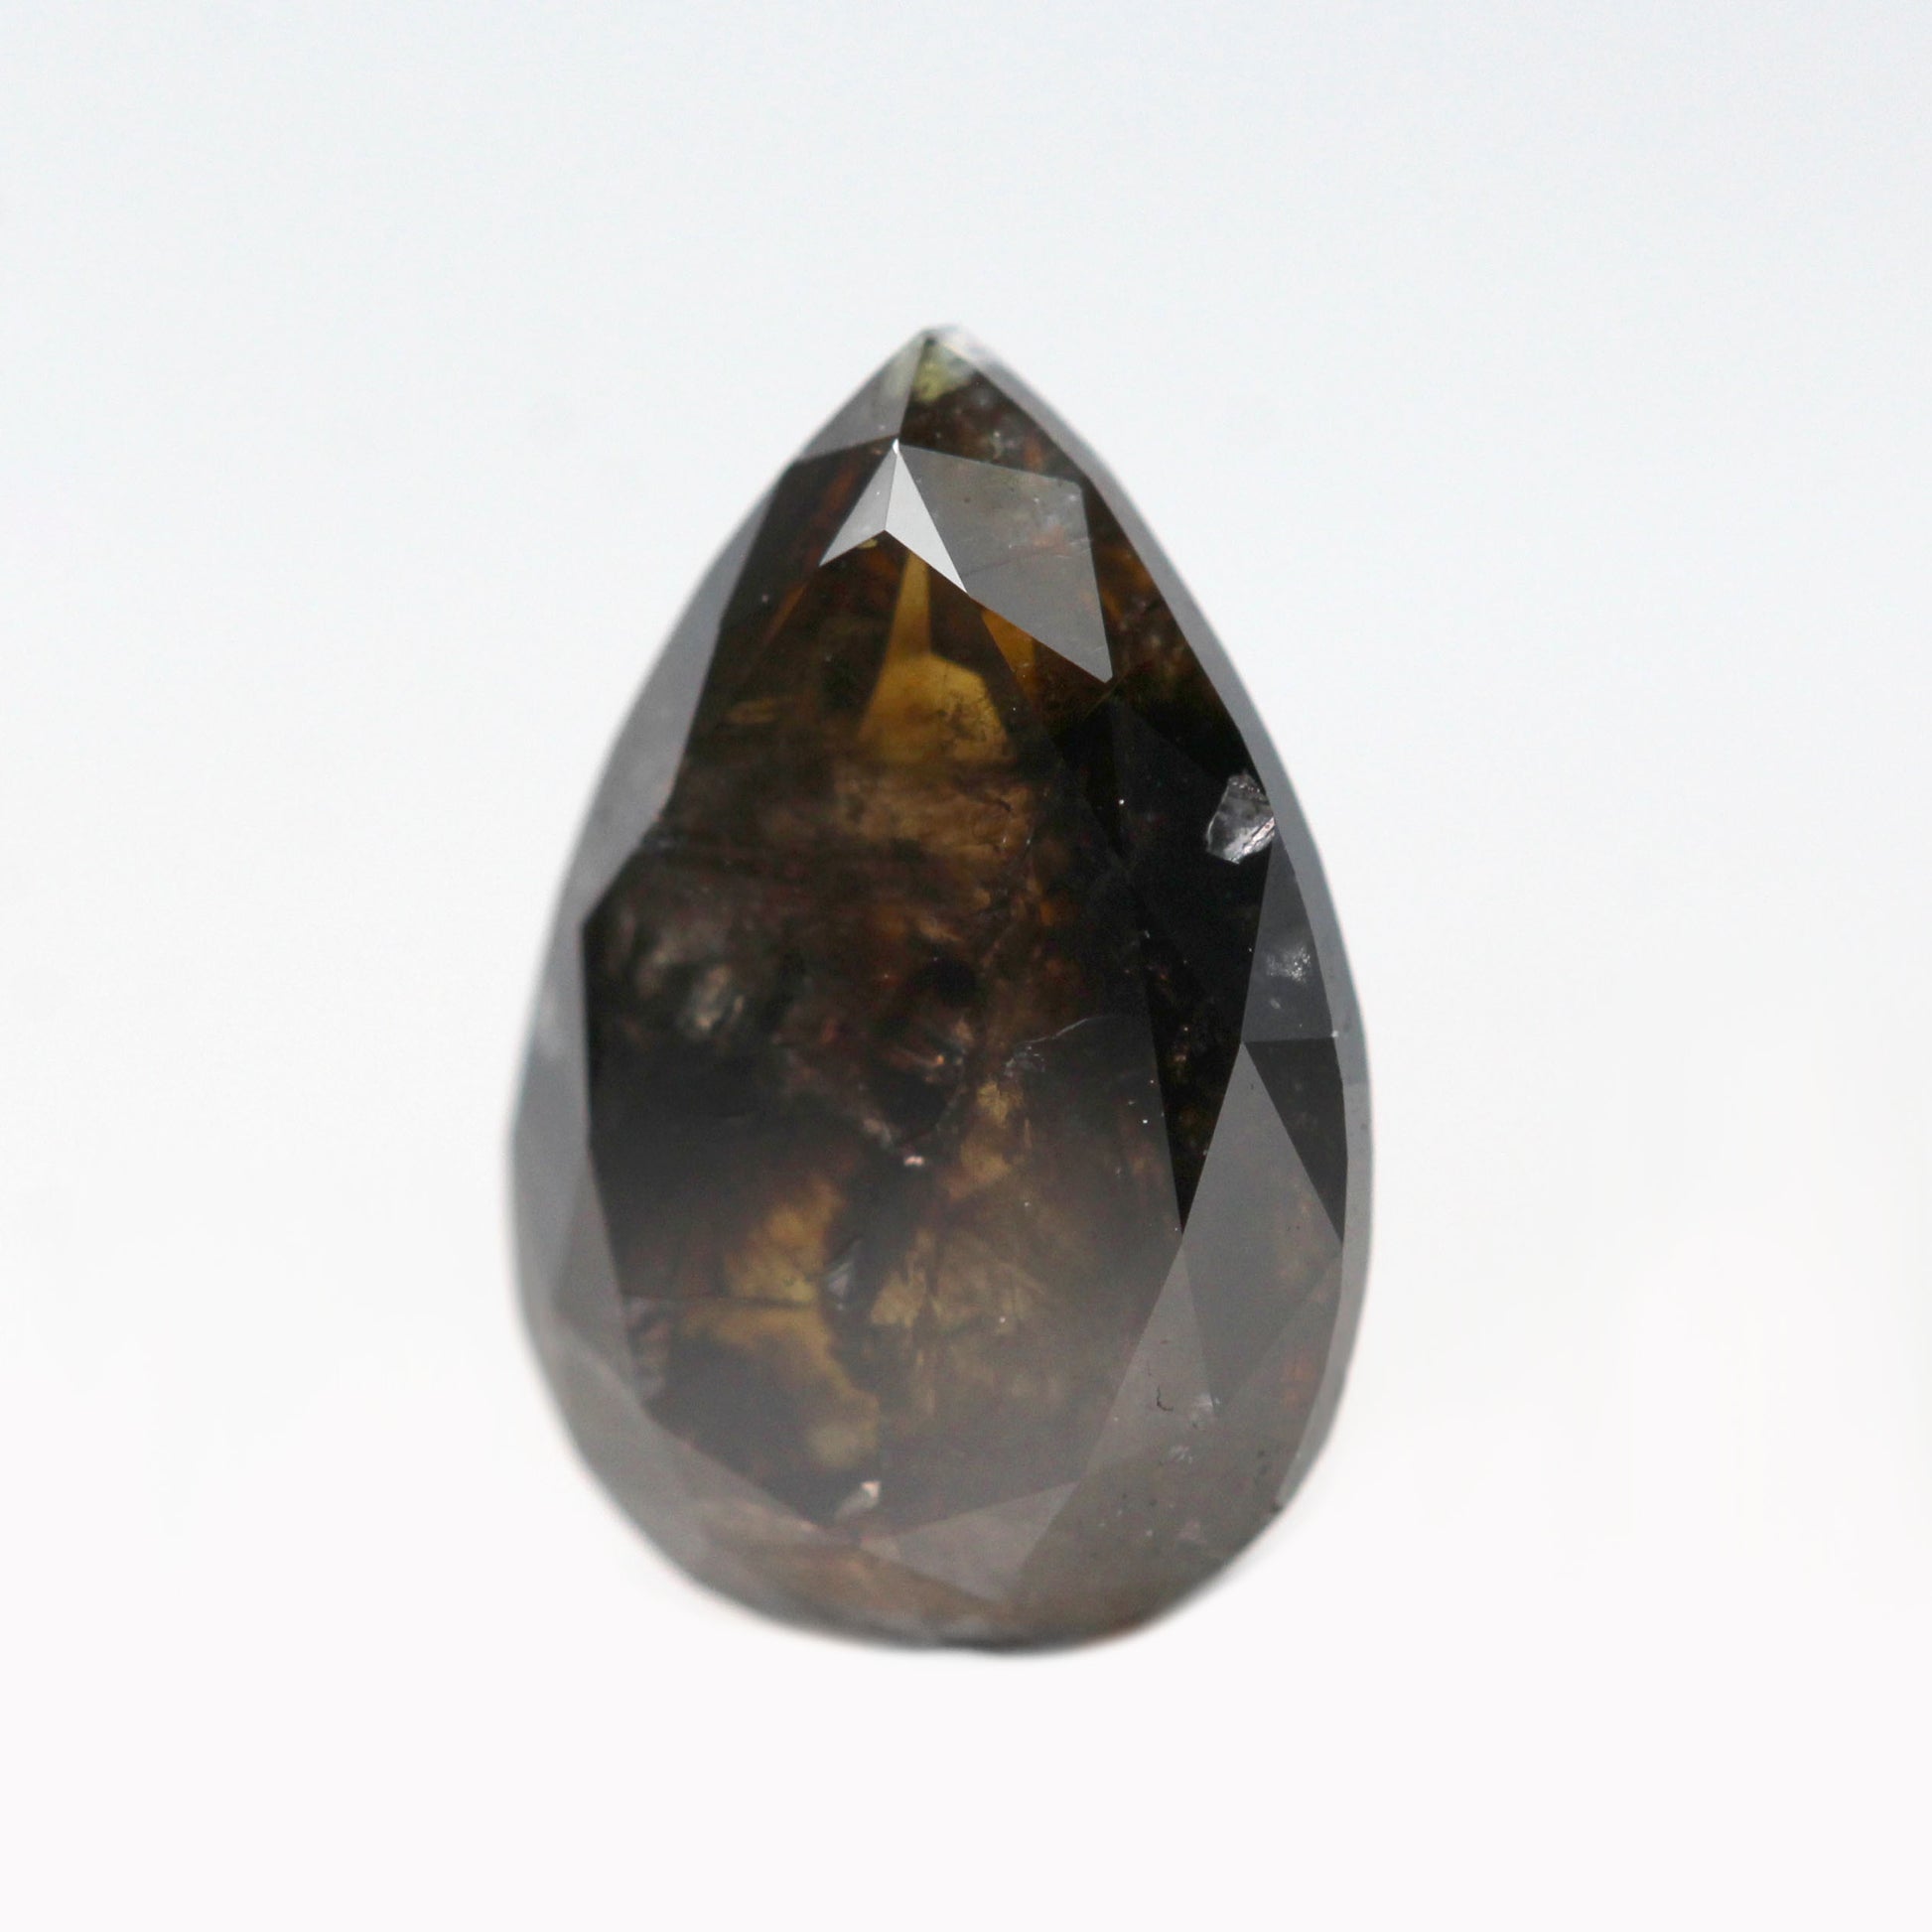 1.84 Carat Dark Brown Pear Celestial Diamond for Custom Work - Inventory Code NBP184 - Midwinter Co. Alternative Bridal Rings and Modern Fine Jewelry